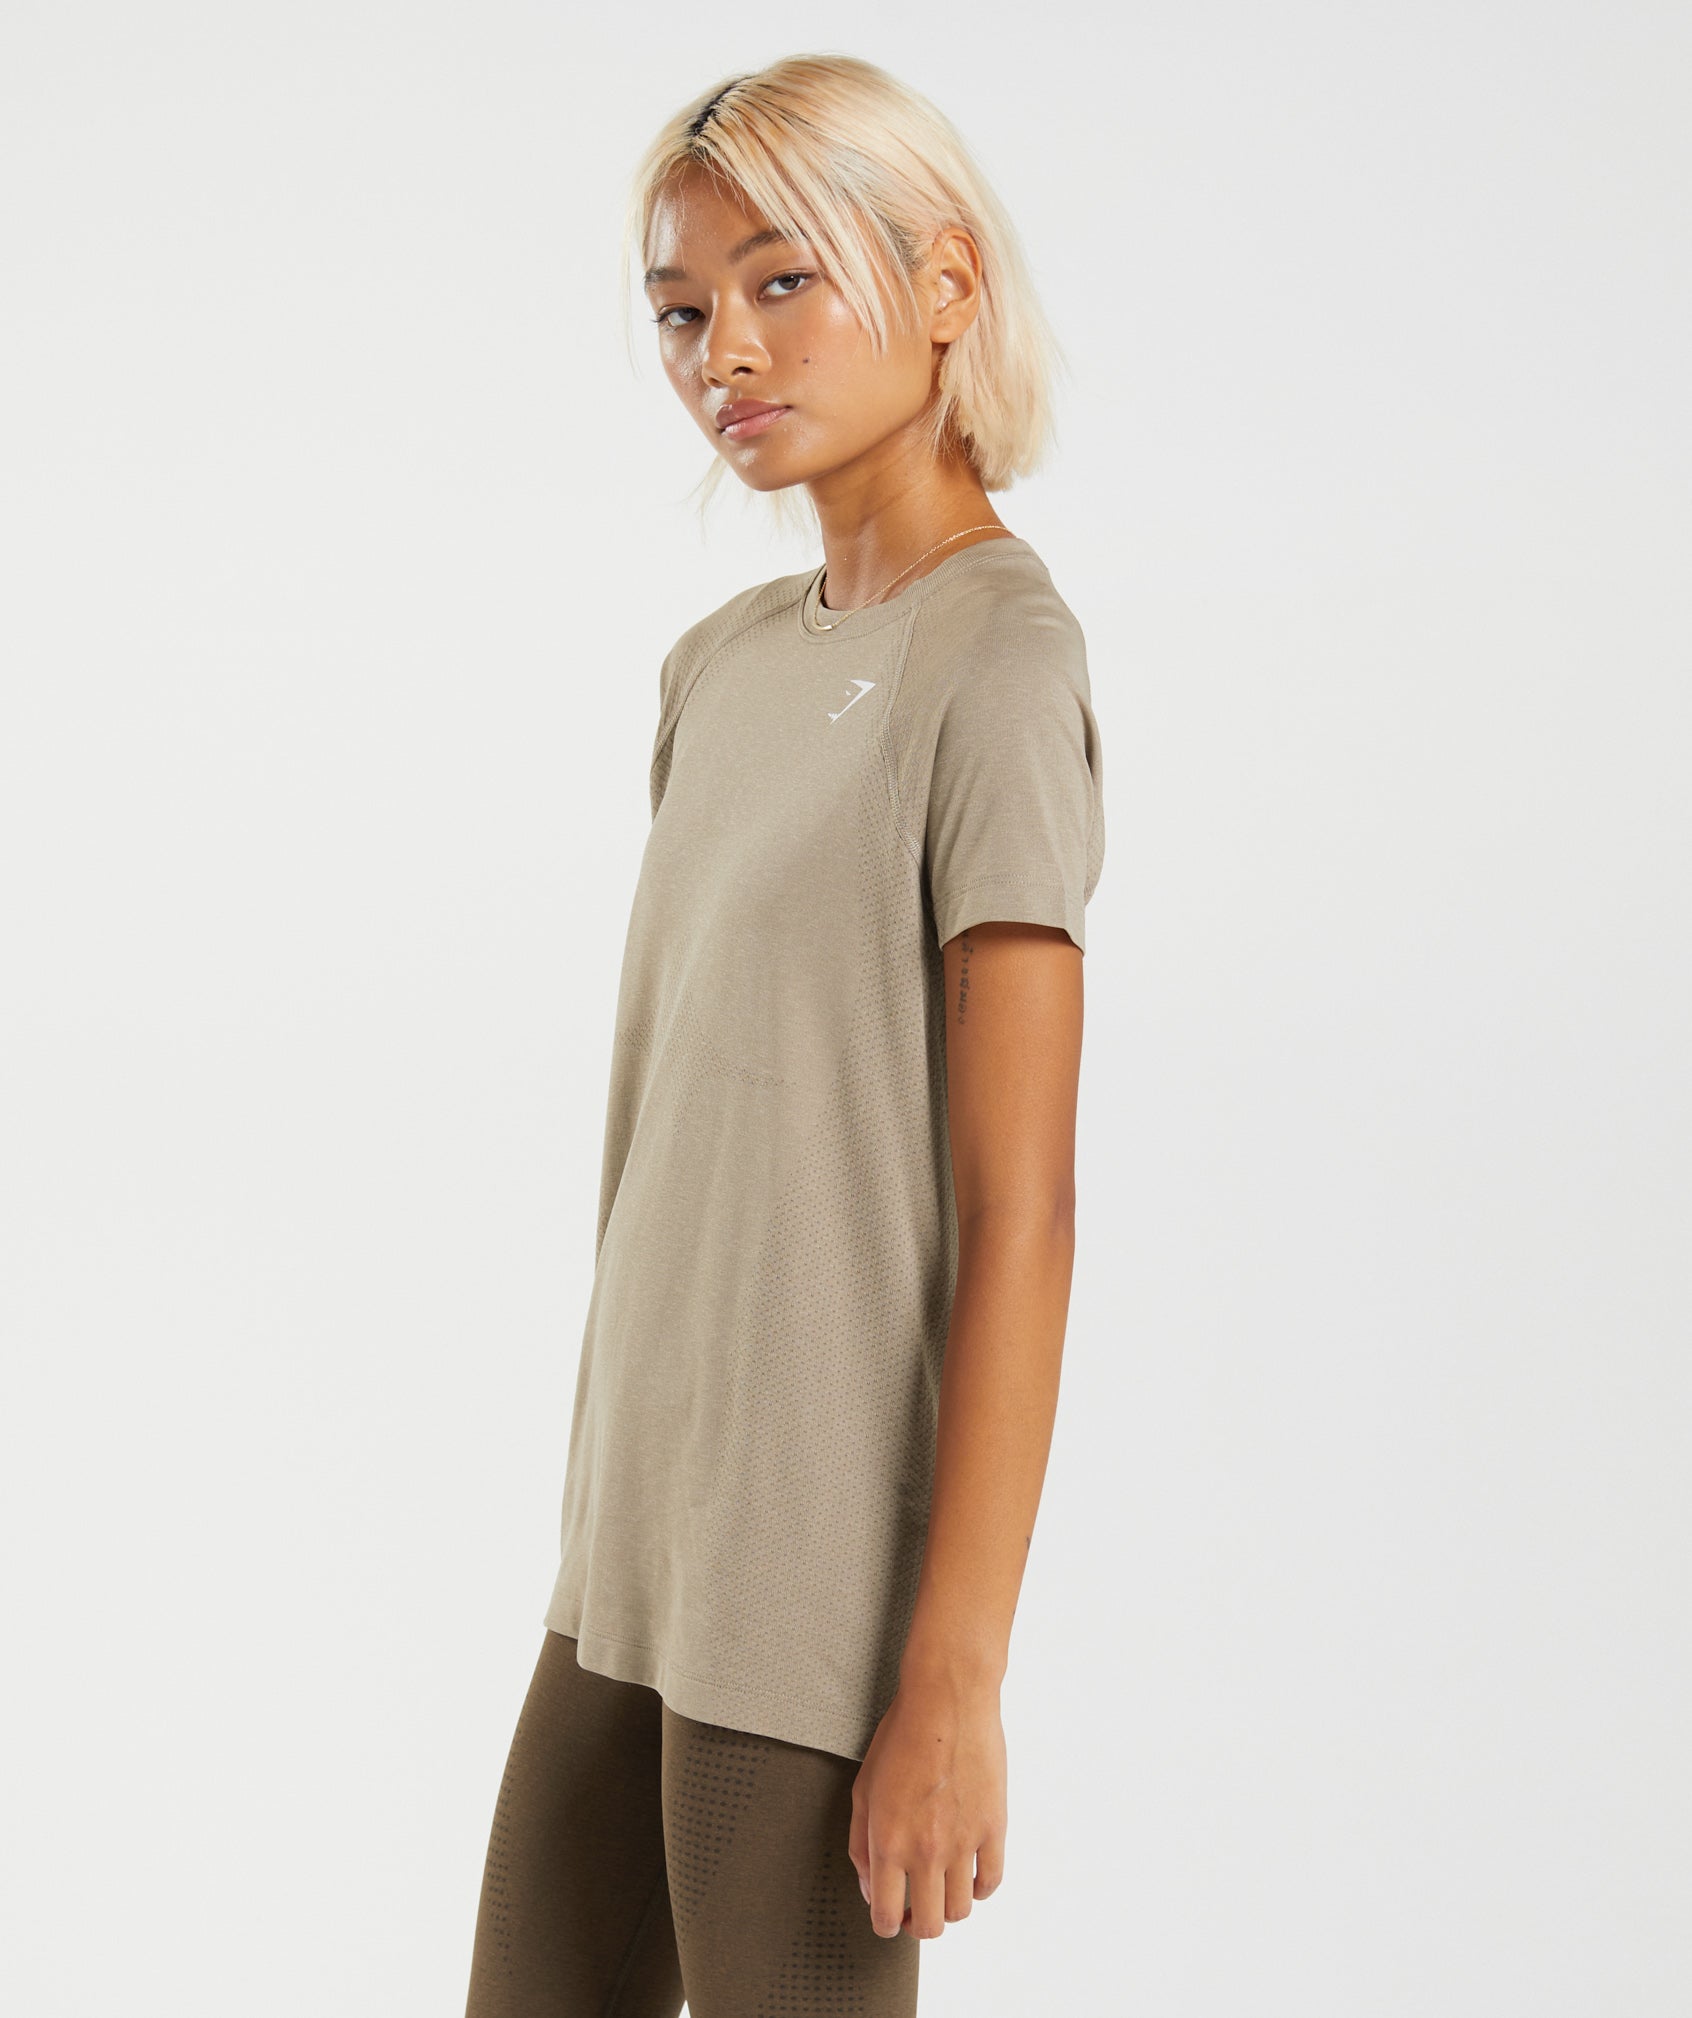 Vital Seamless 2.0 Light T-Shirt in Vanilla Brown Marl